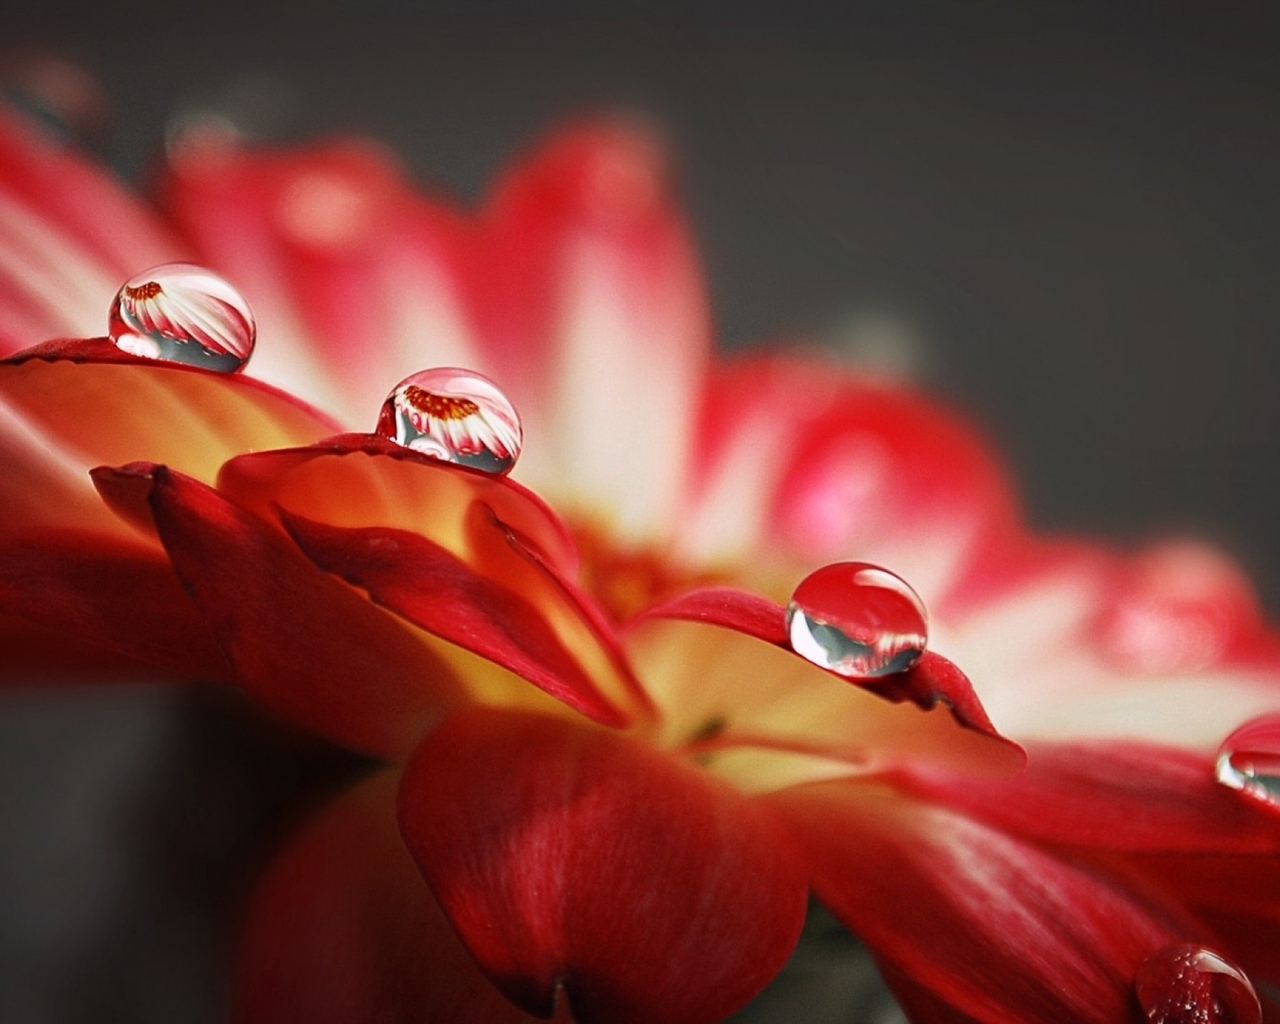 Image: Drops, water, petals, flower, macro, reflection